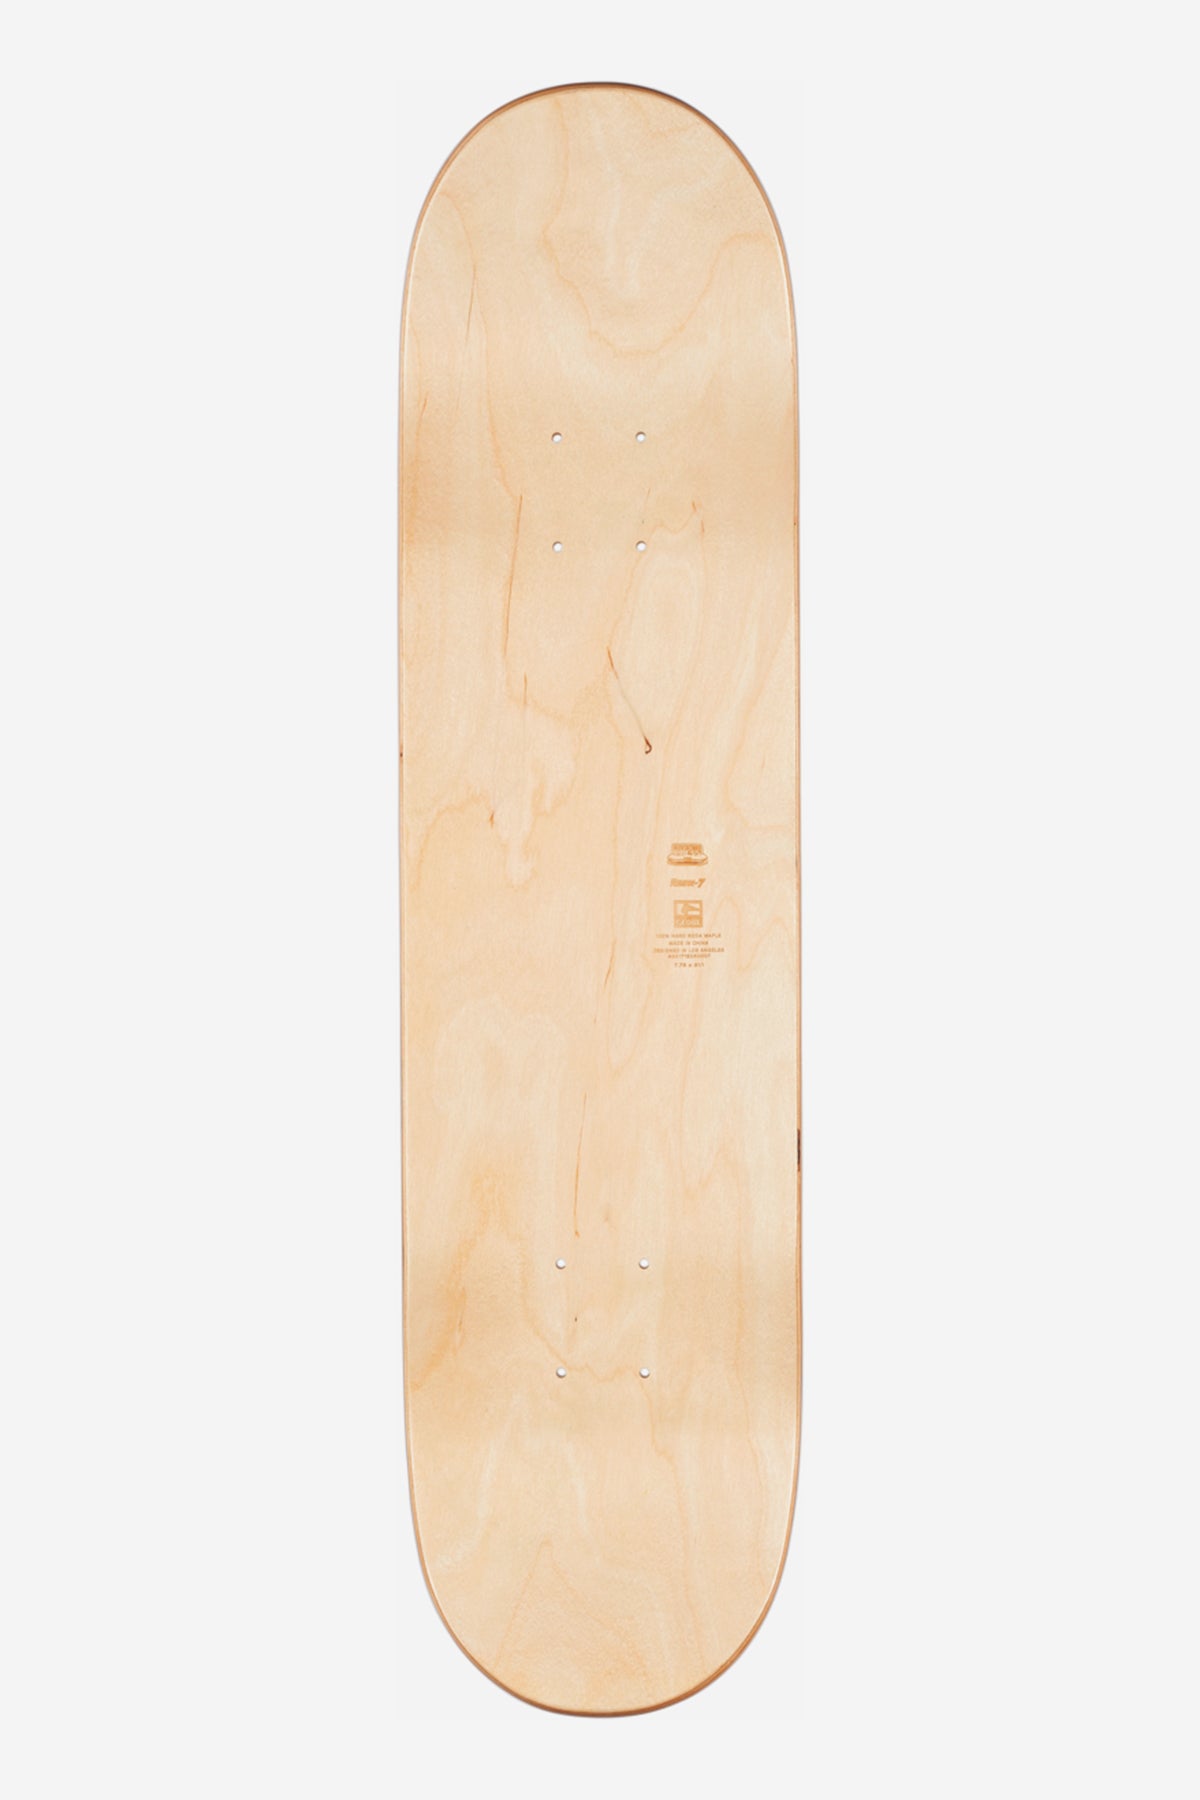 Globe - Goodstock - Clay - 8.5" Skateboard Deck